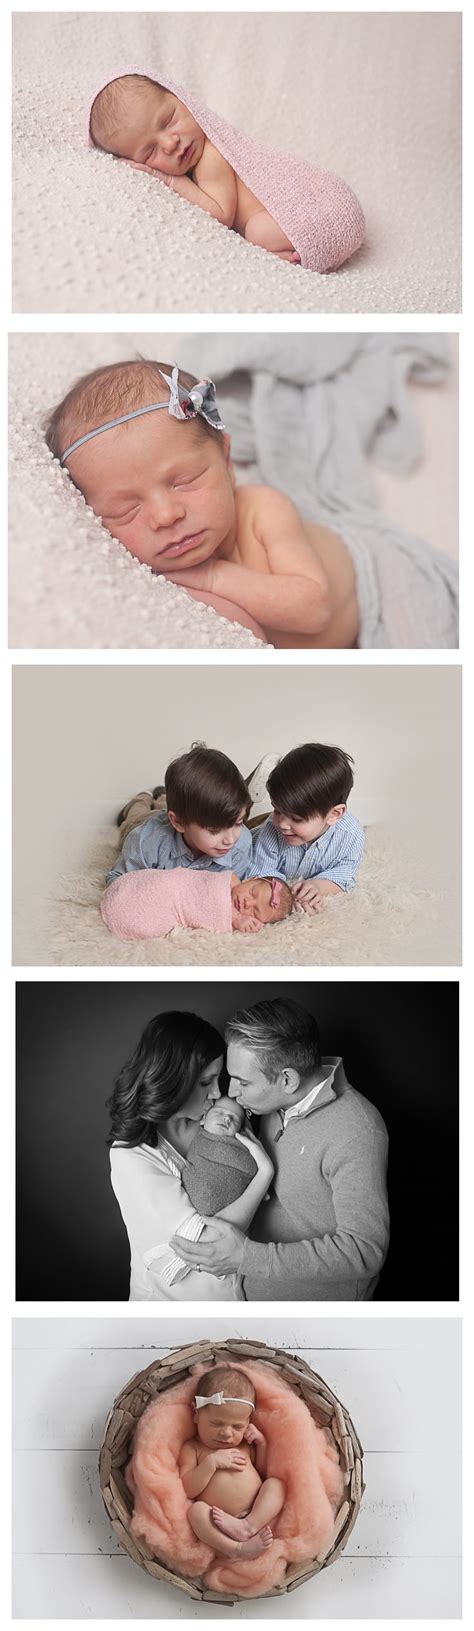 Newborn photography petaluma  Lani and Luca